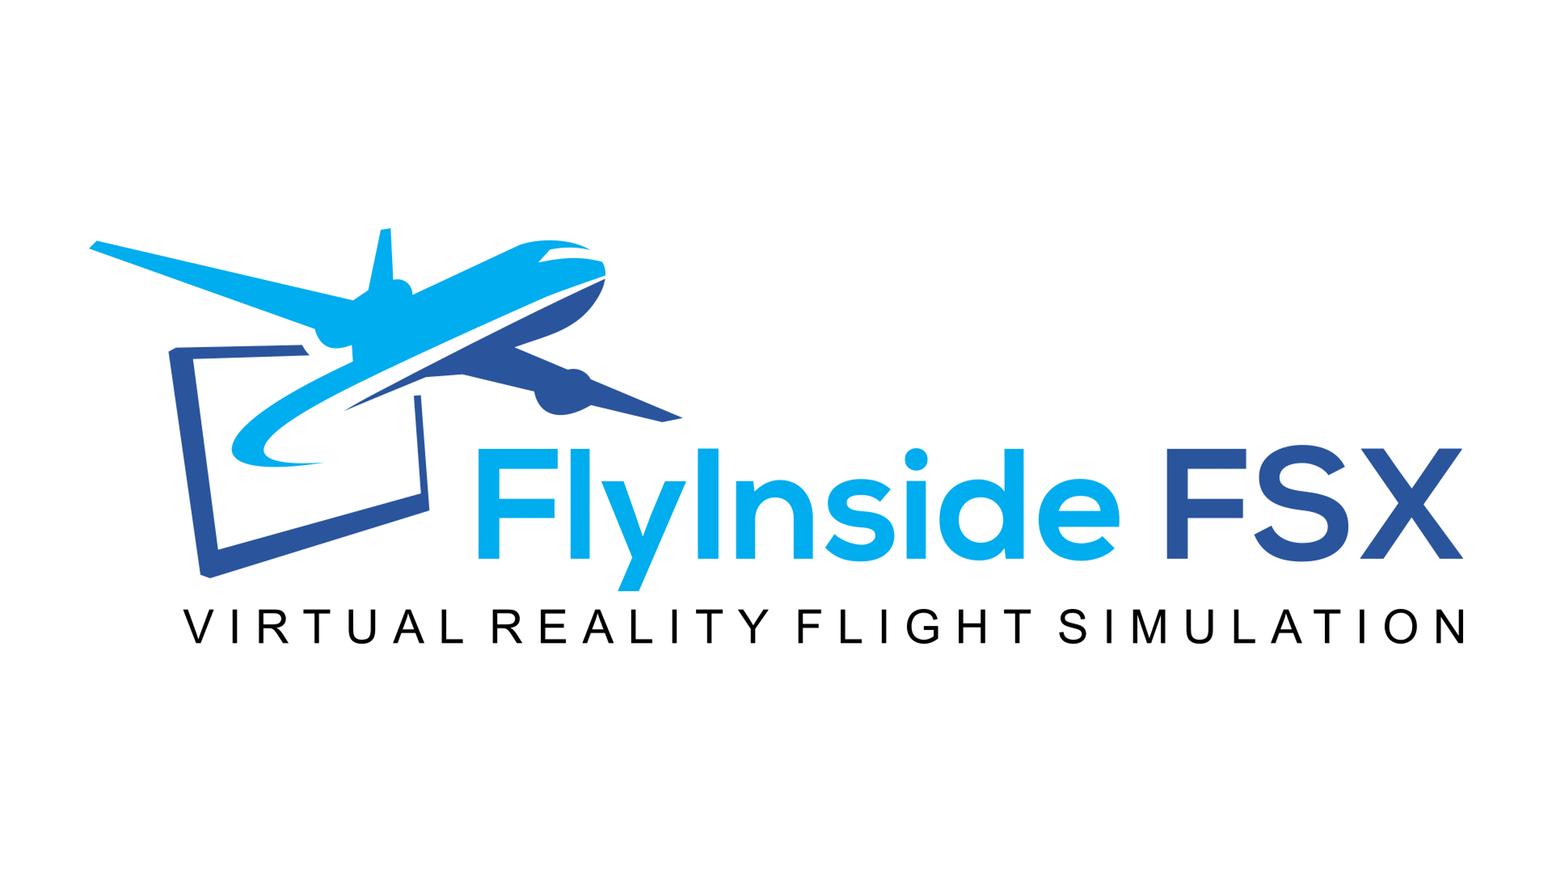 FSX Logo - FlyInside FSX by Daniel Church — Kickstarter